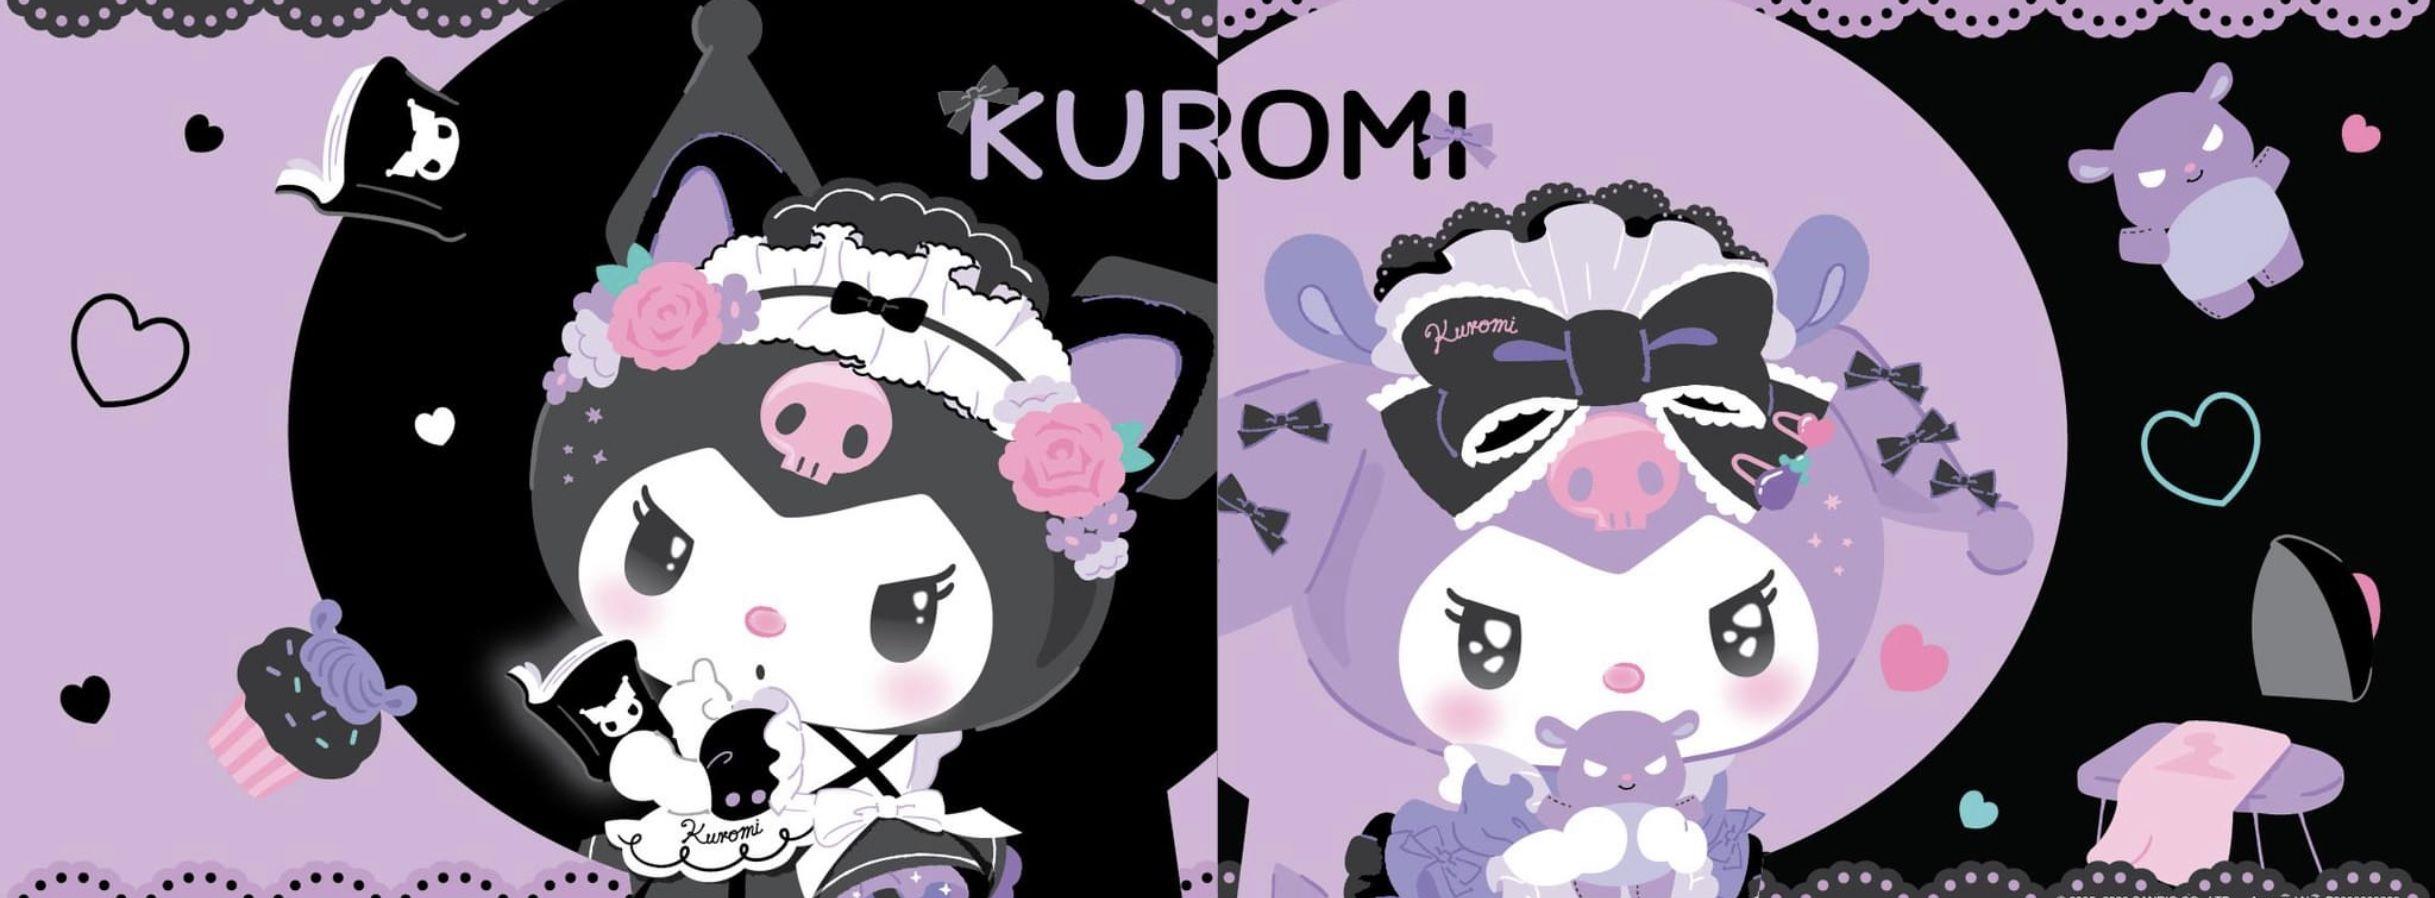 Free download Kuromi Hello kitty wallpaper hd Hello kitty iphone